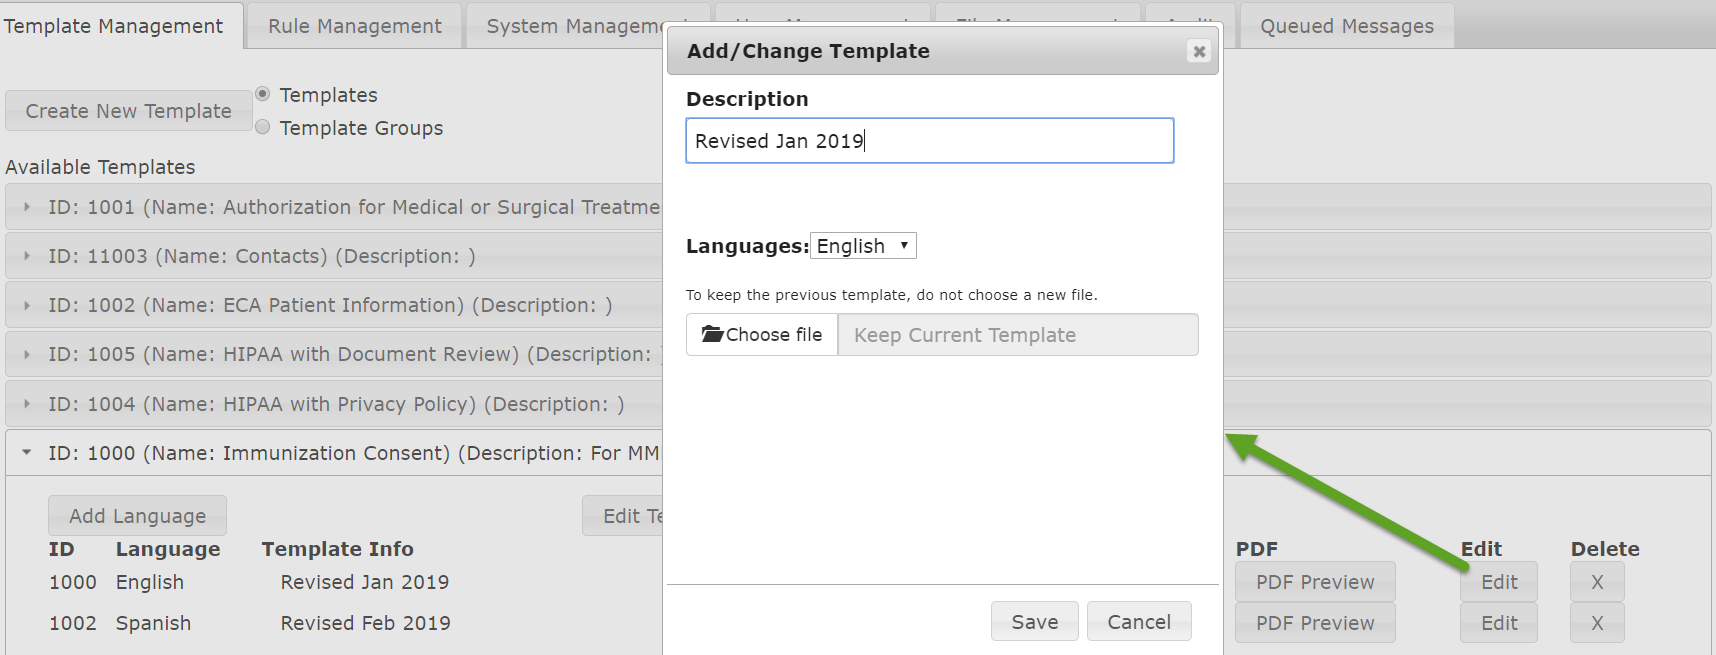 VSC 6.0 Edit Language Template